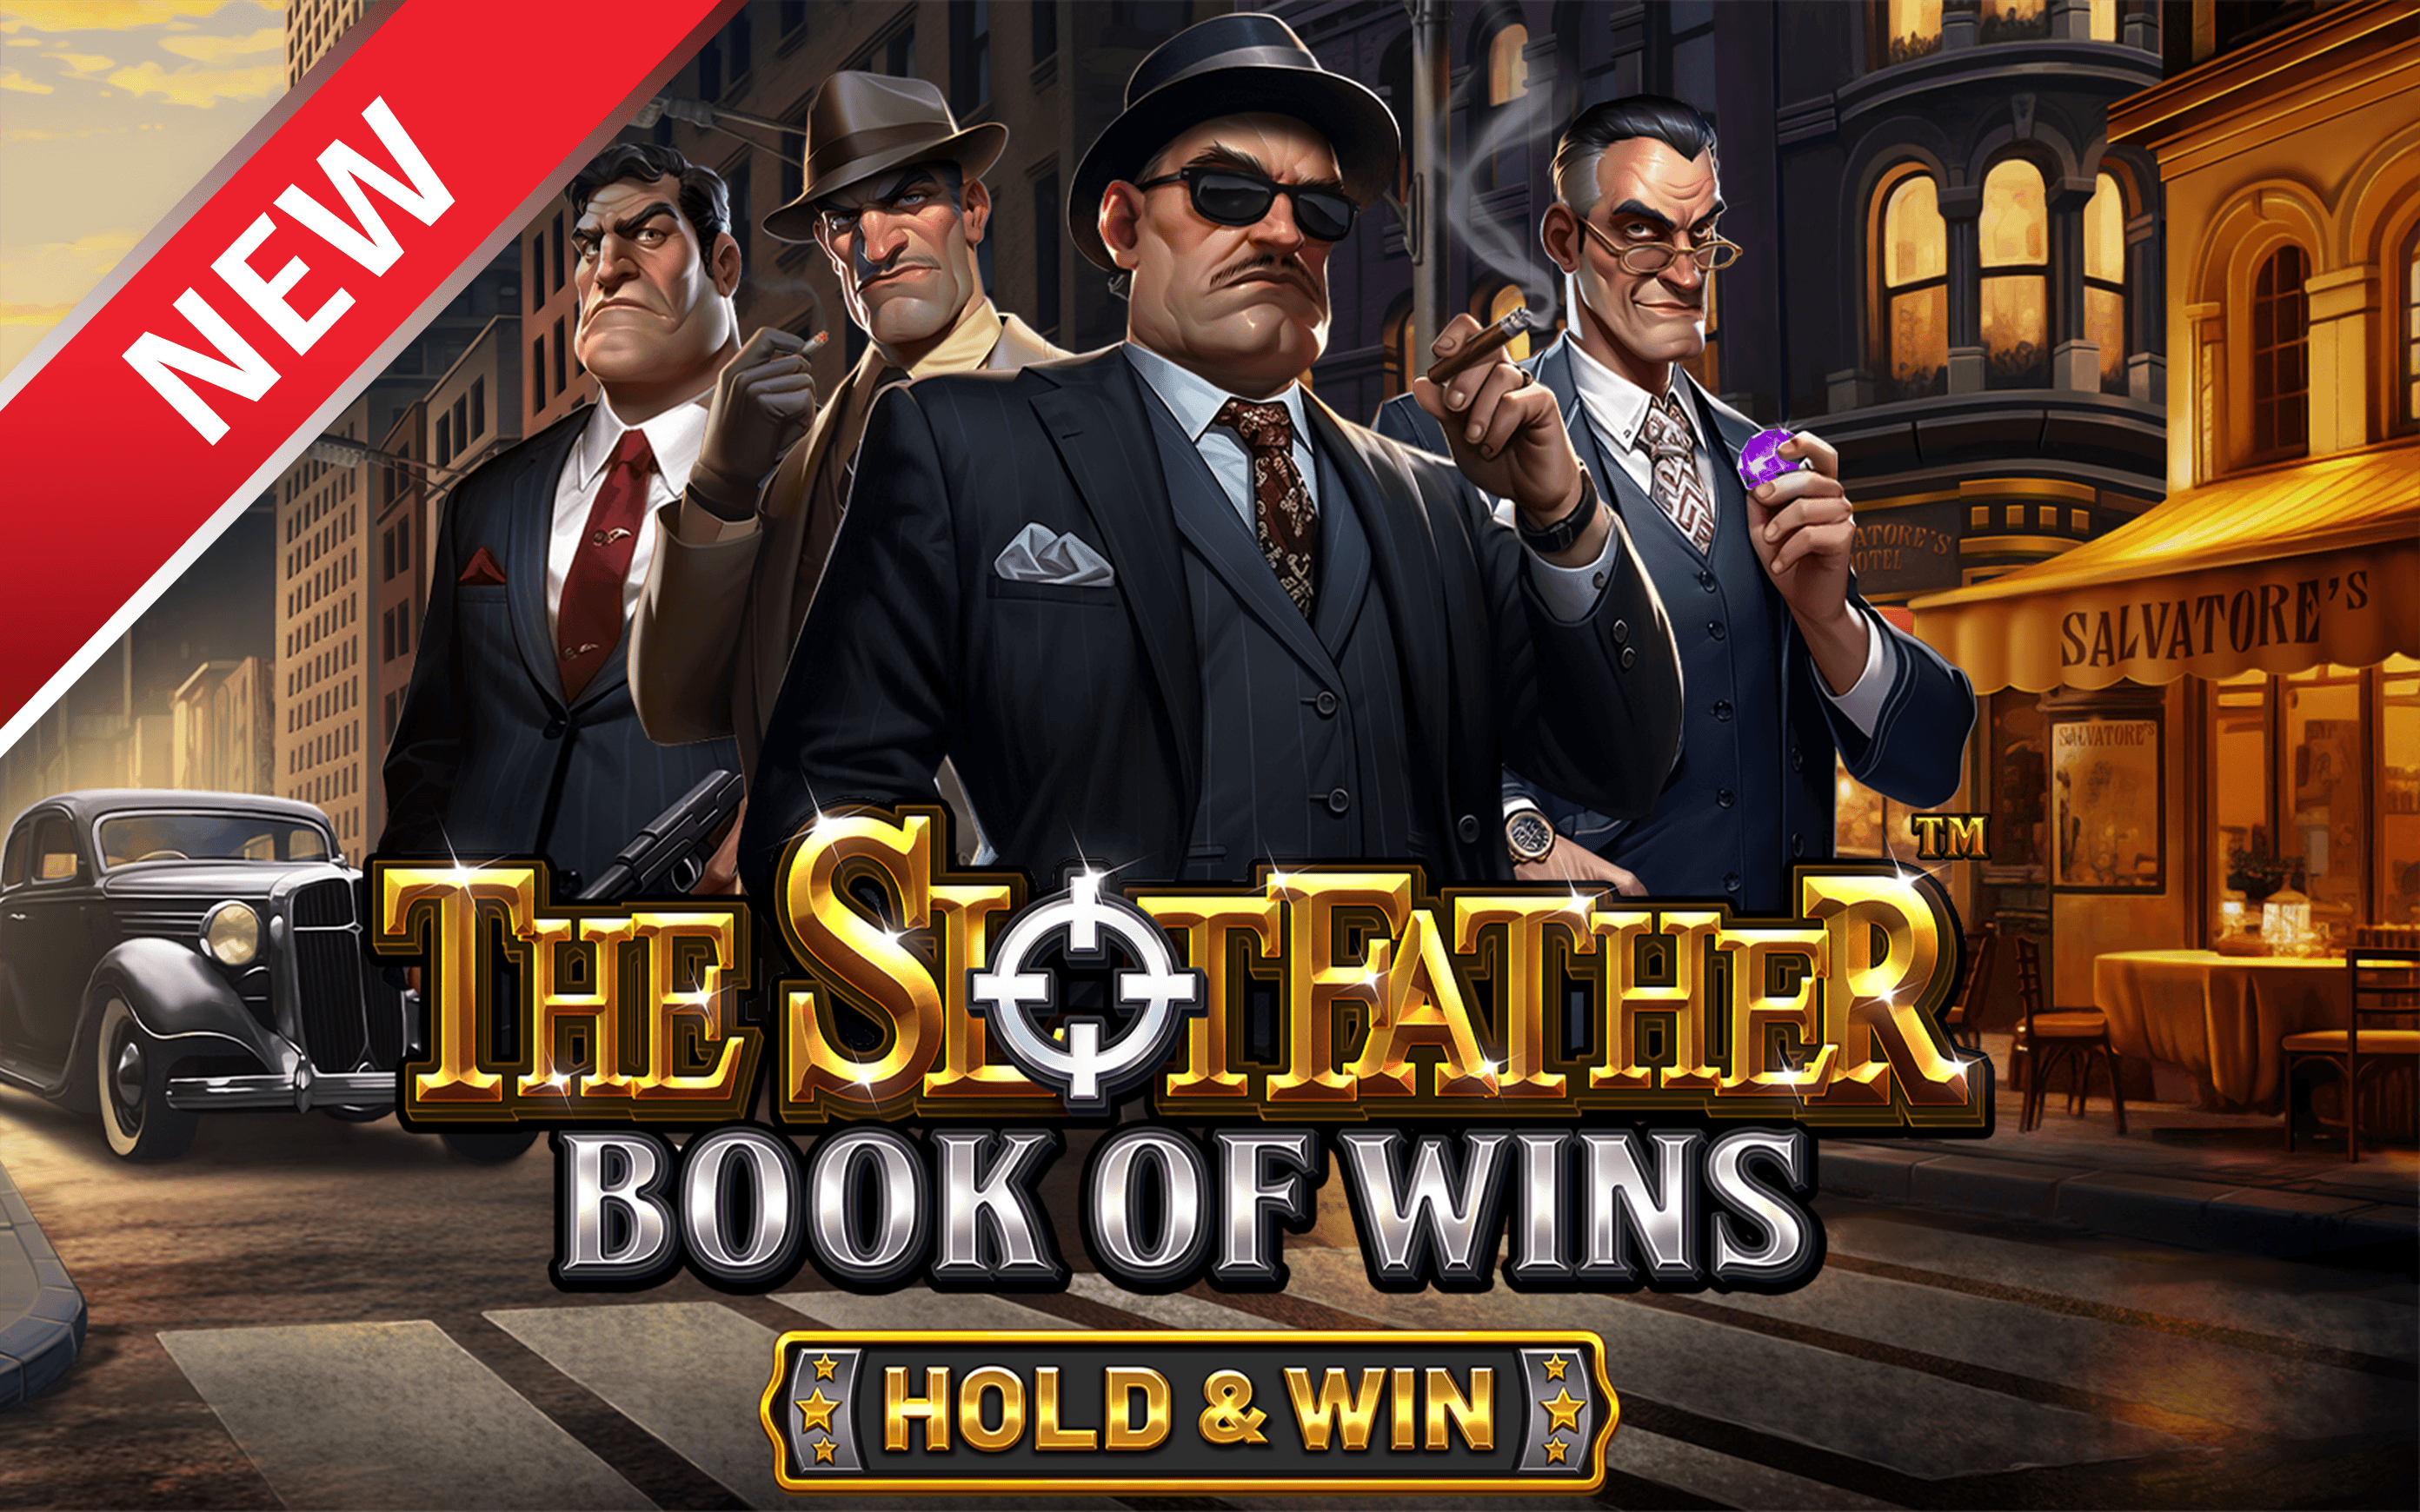 Jouer à The Slotfather: Book of Wins - Hold & Win™ sur le casino en ligne Starcasino.be